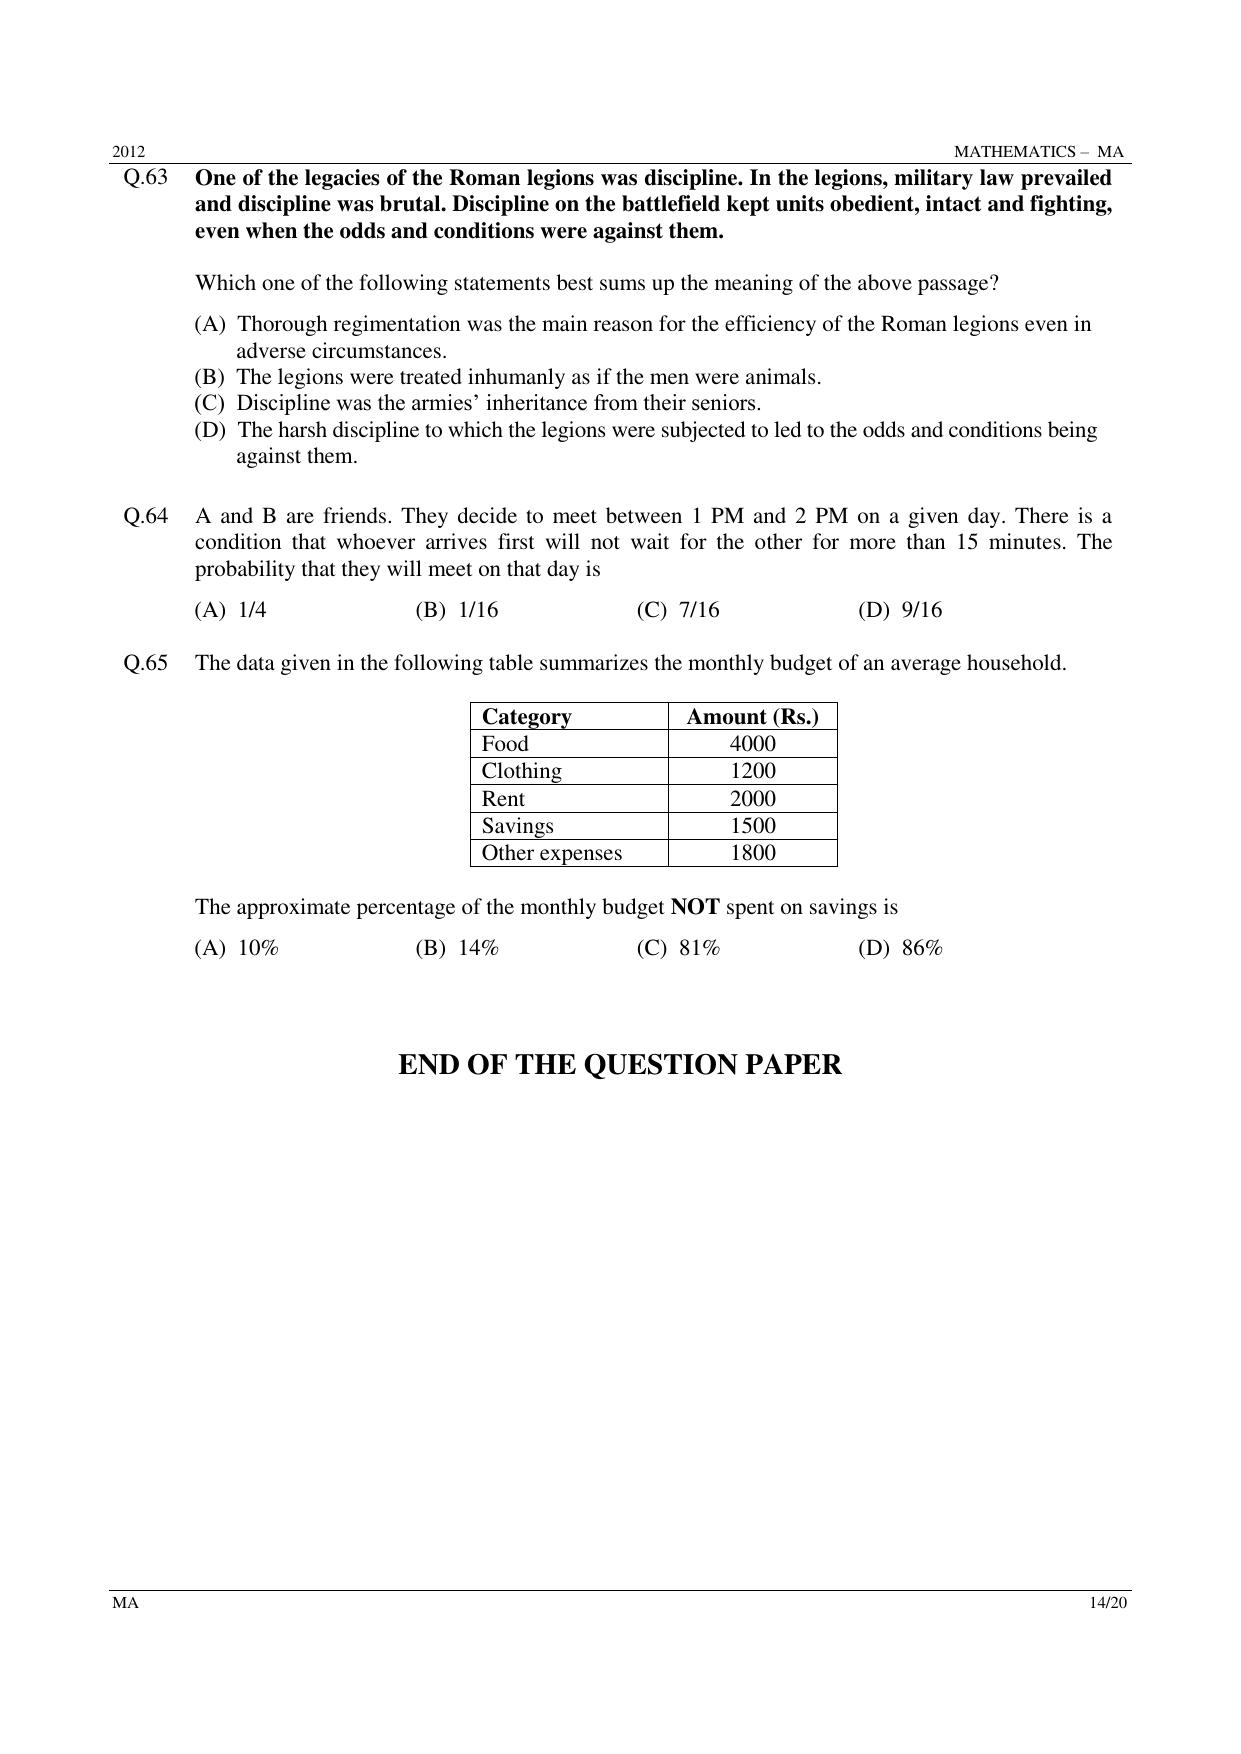 GATE 2012 Mathematics (MA) Question Paper with Answer Key - Page 14